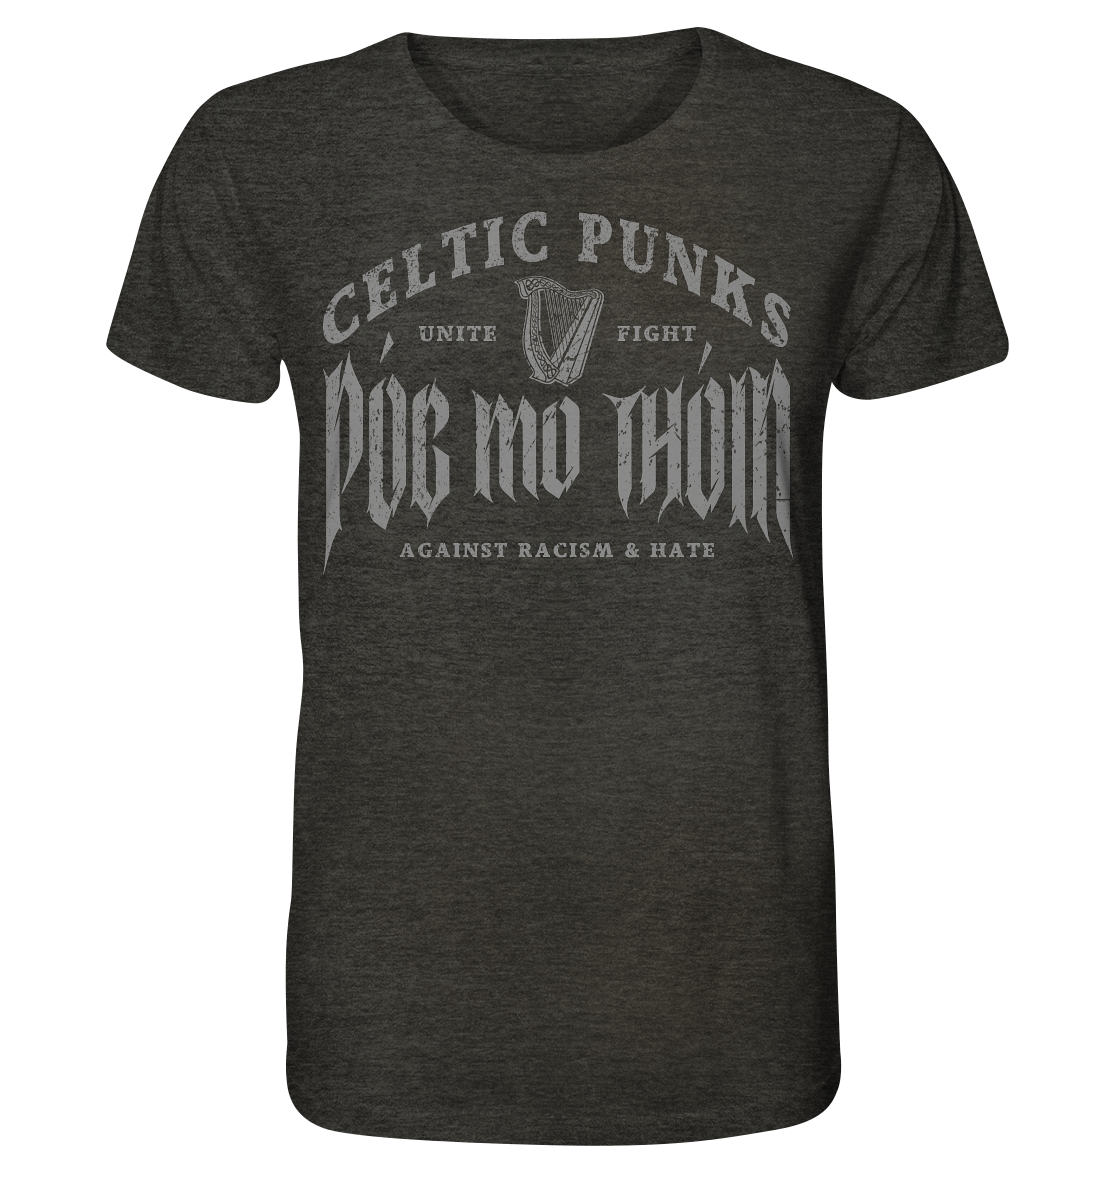 Póg Mo Thóin Streetwear "Celtic Punks Against Racism & Hate / Unite & Fight" - Organic Shirt (meliert)